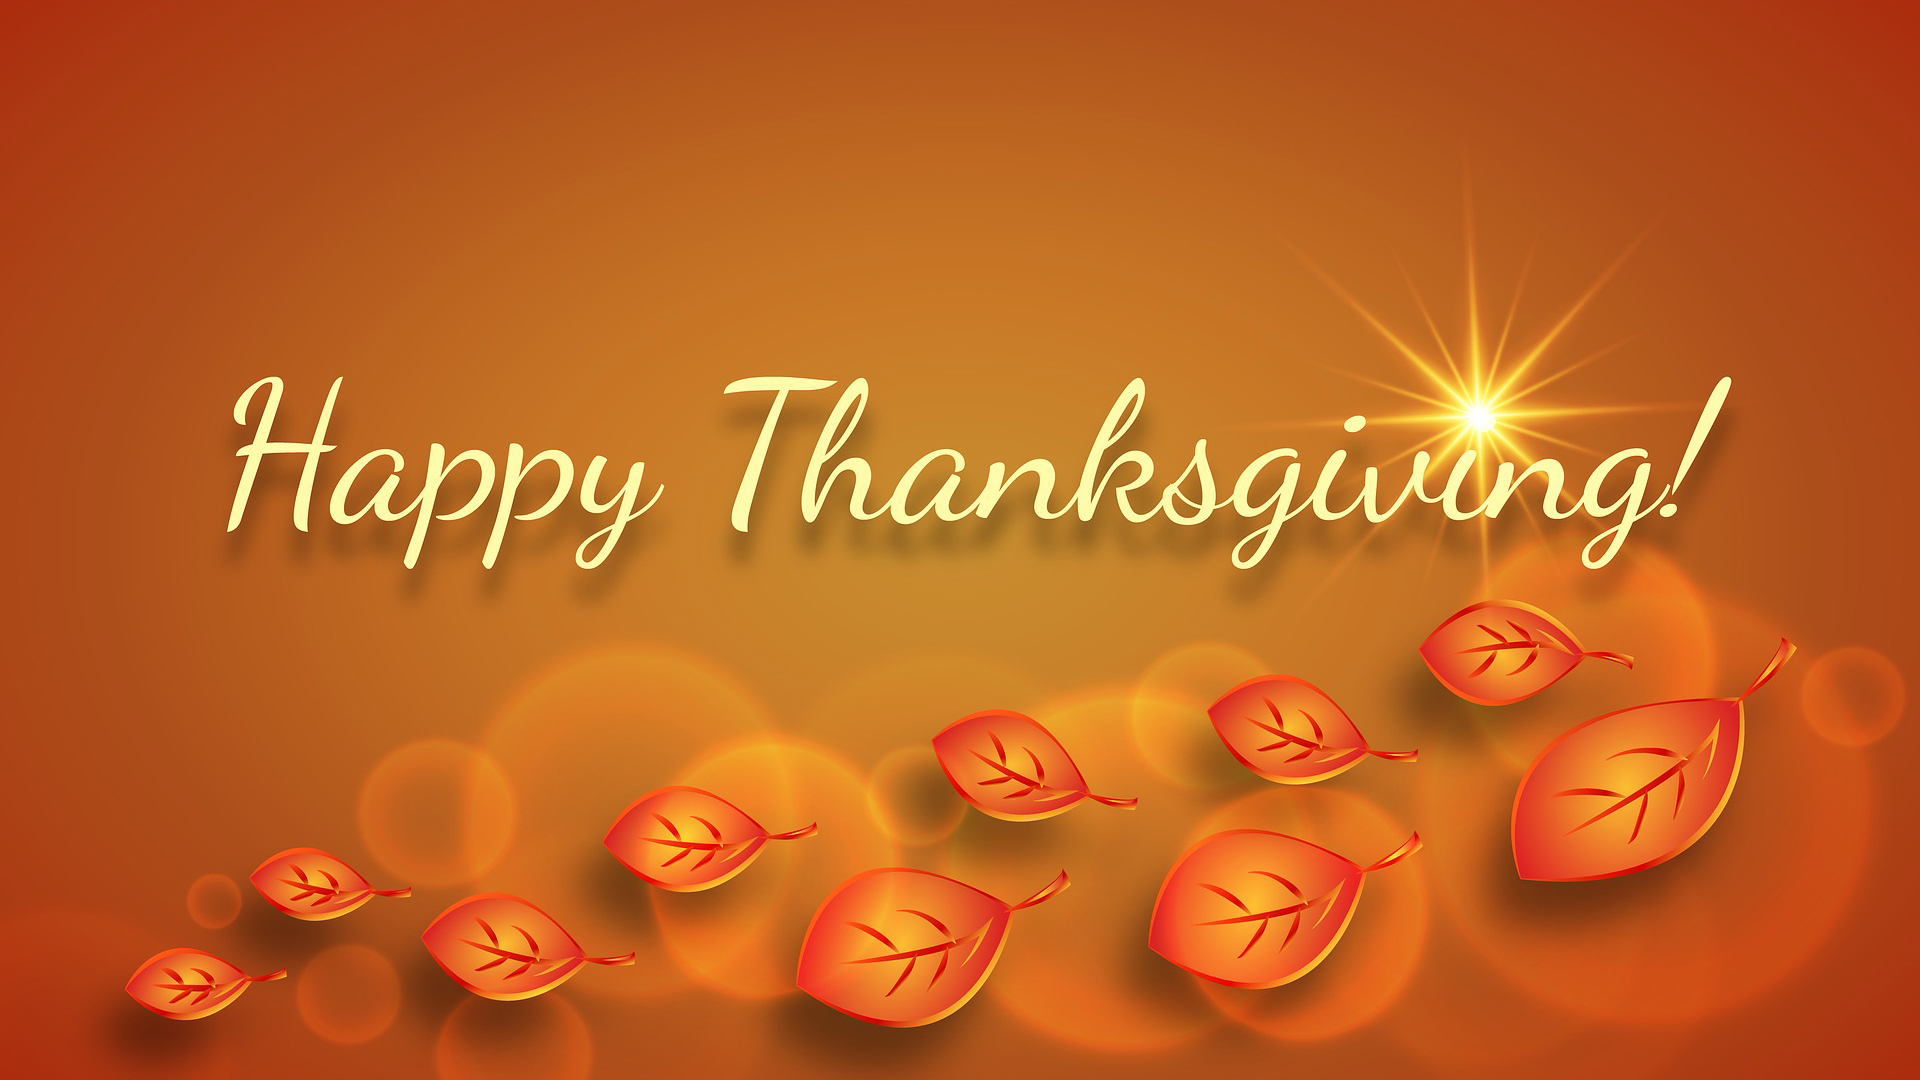 Thanksgiving Day November 26 Arreya Digital Signage Graphic